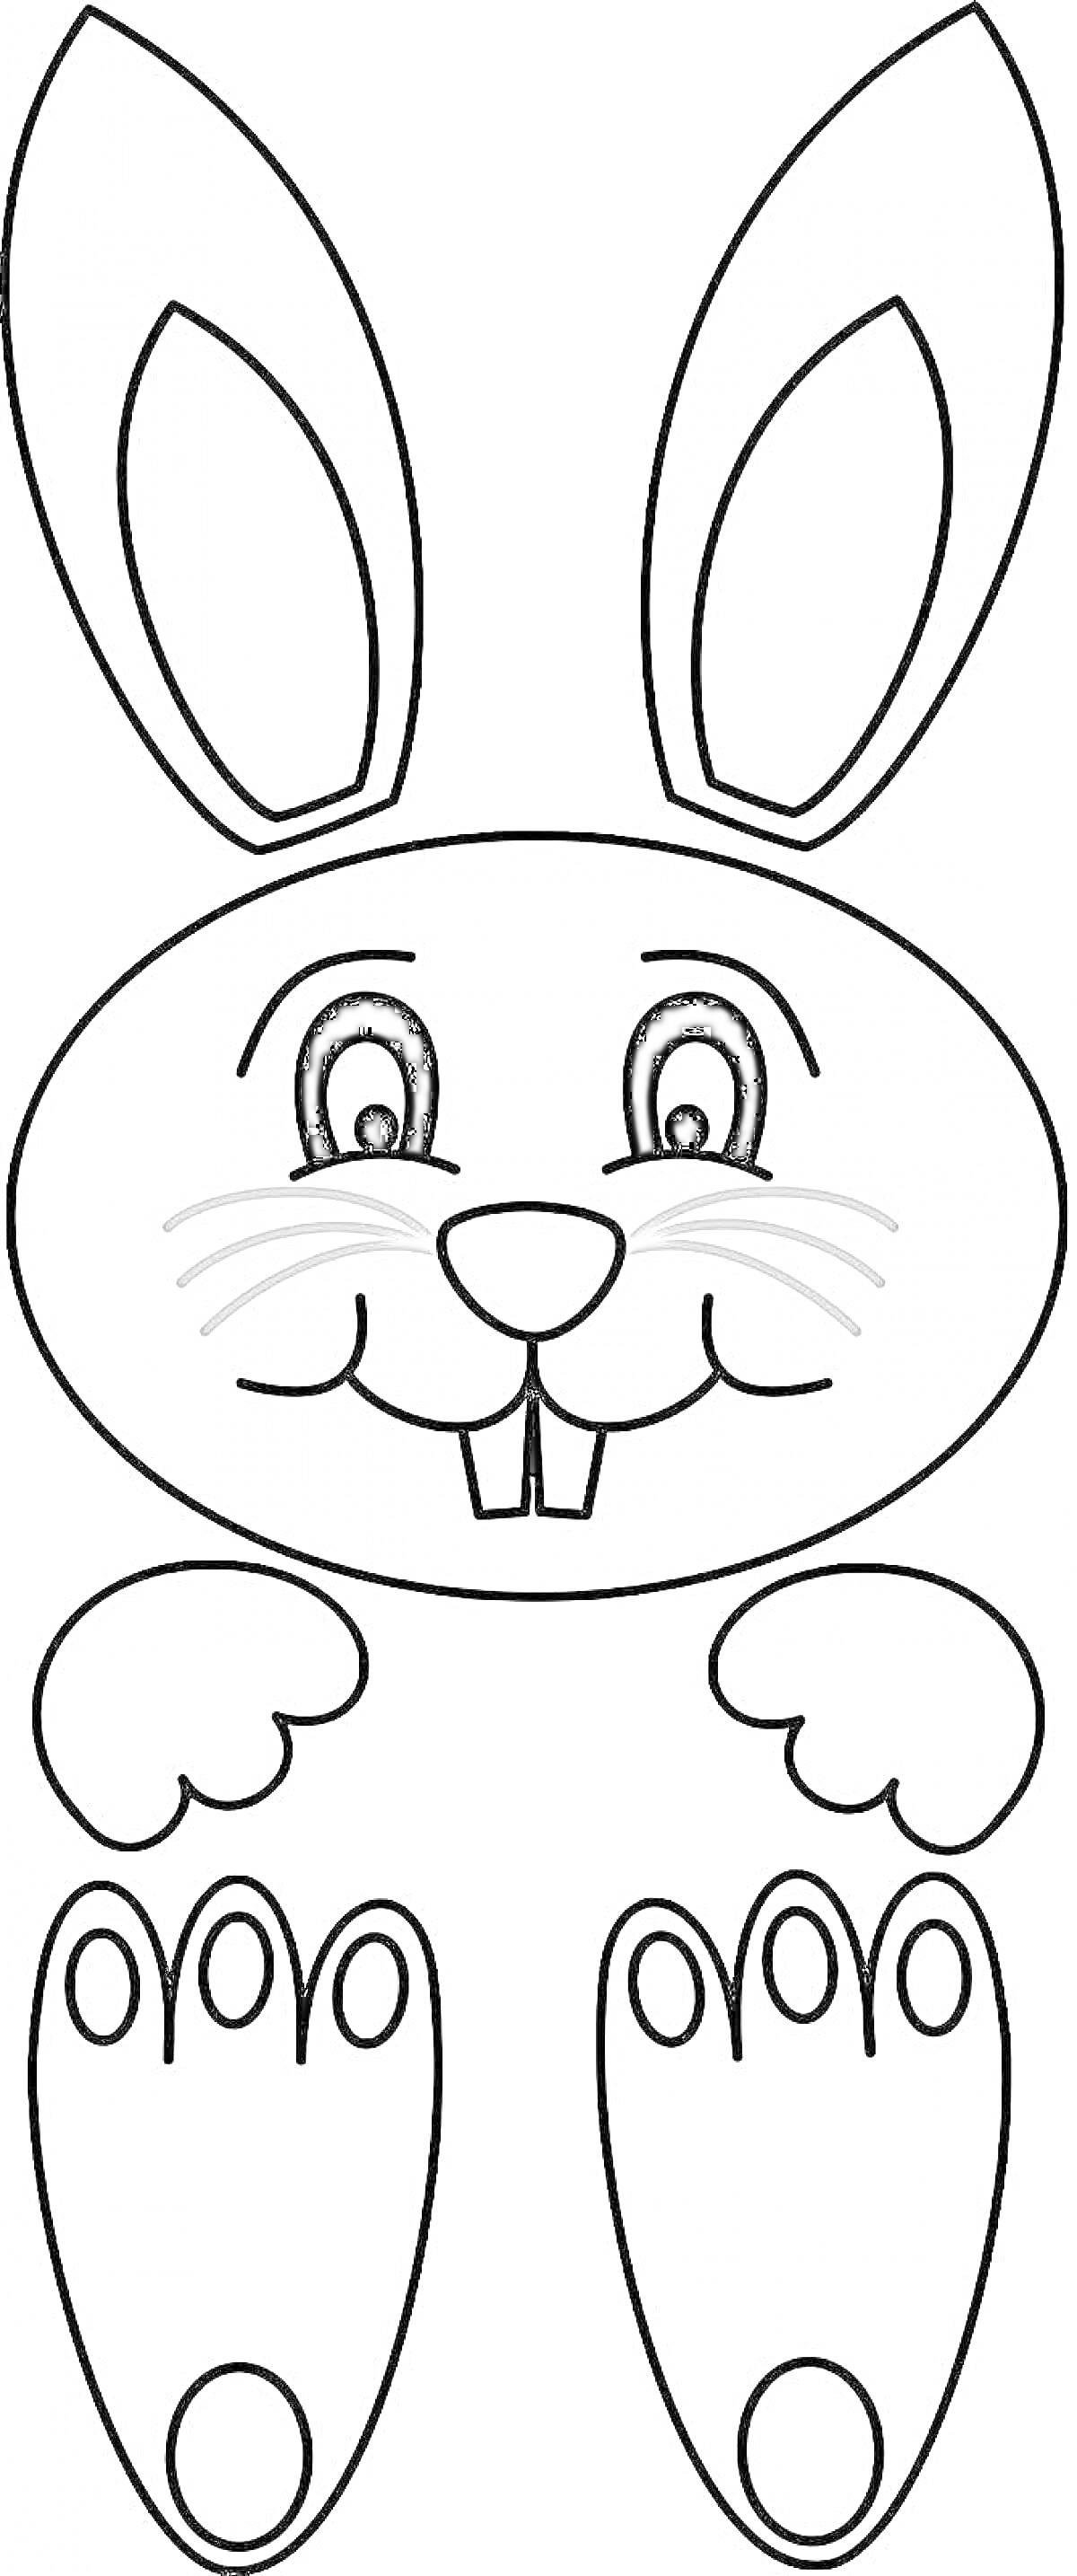 Раскраска Лицо зайца, уши, глаза, нос, усы, передние лапы, задние лапы, зубы